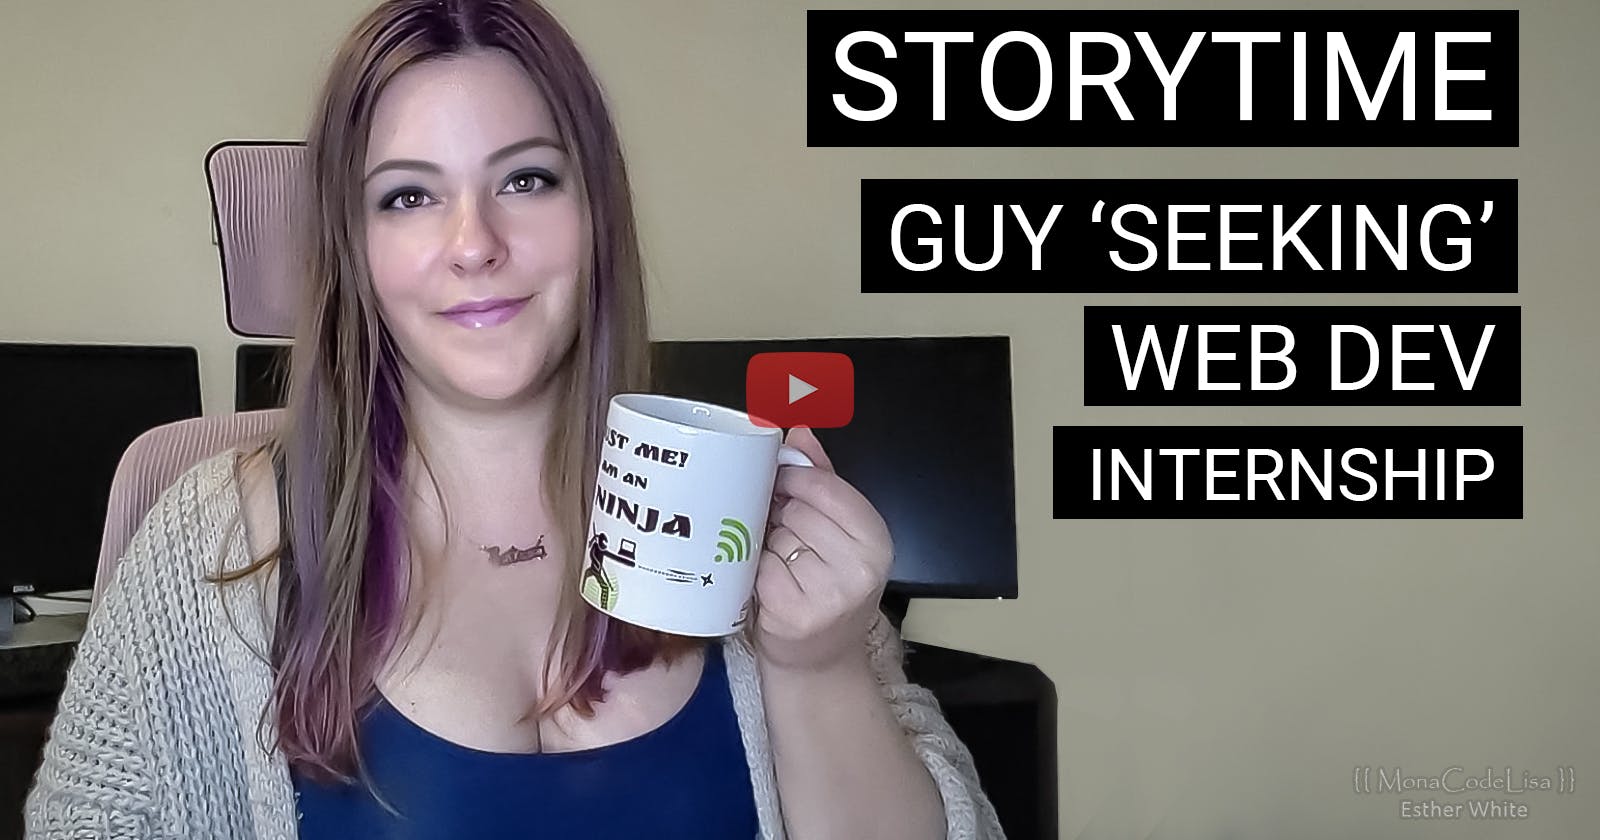 Guy ‘Seeking’ a Web Dev Internship – Storytime